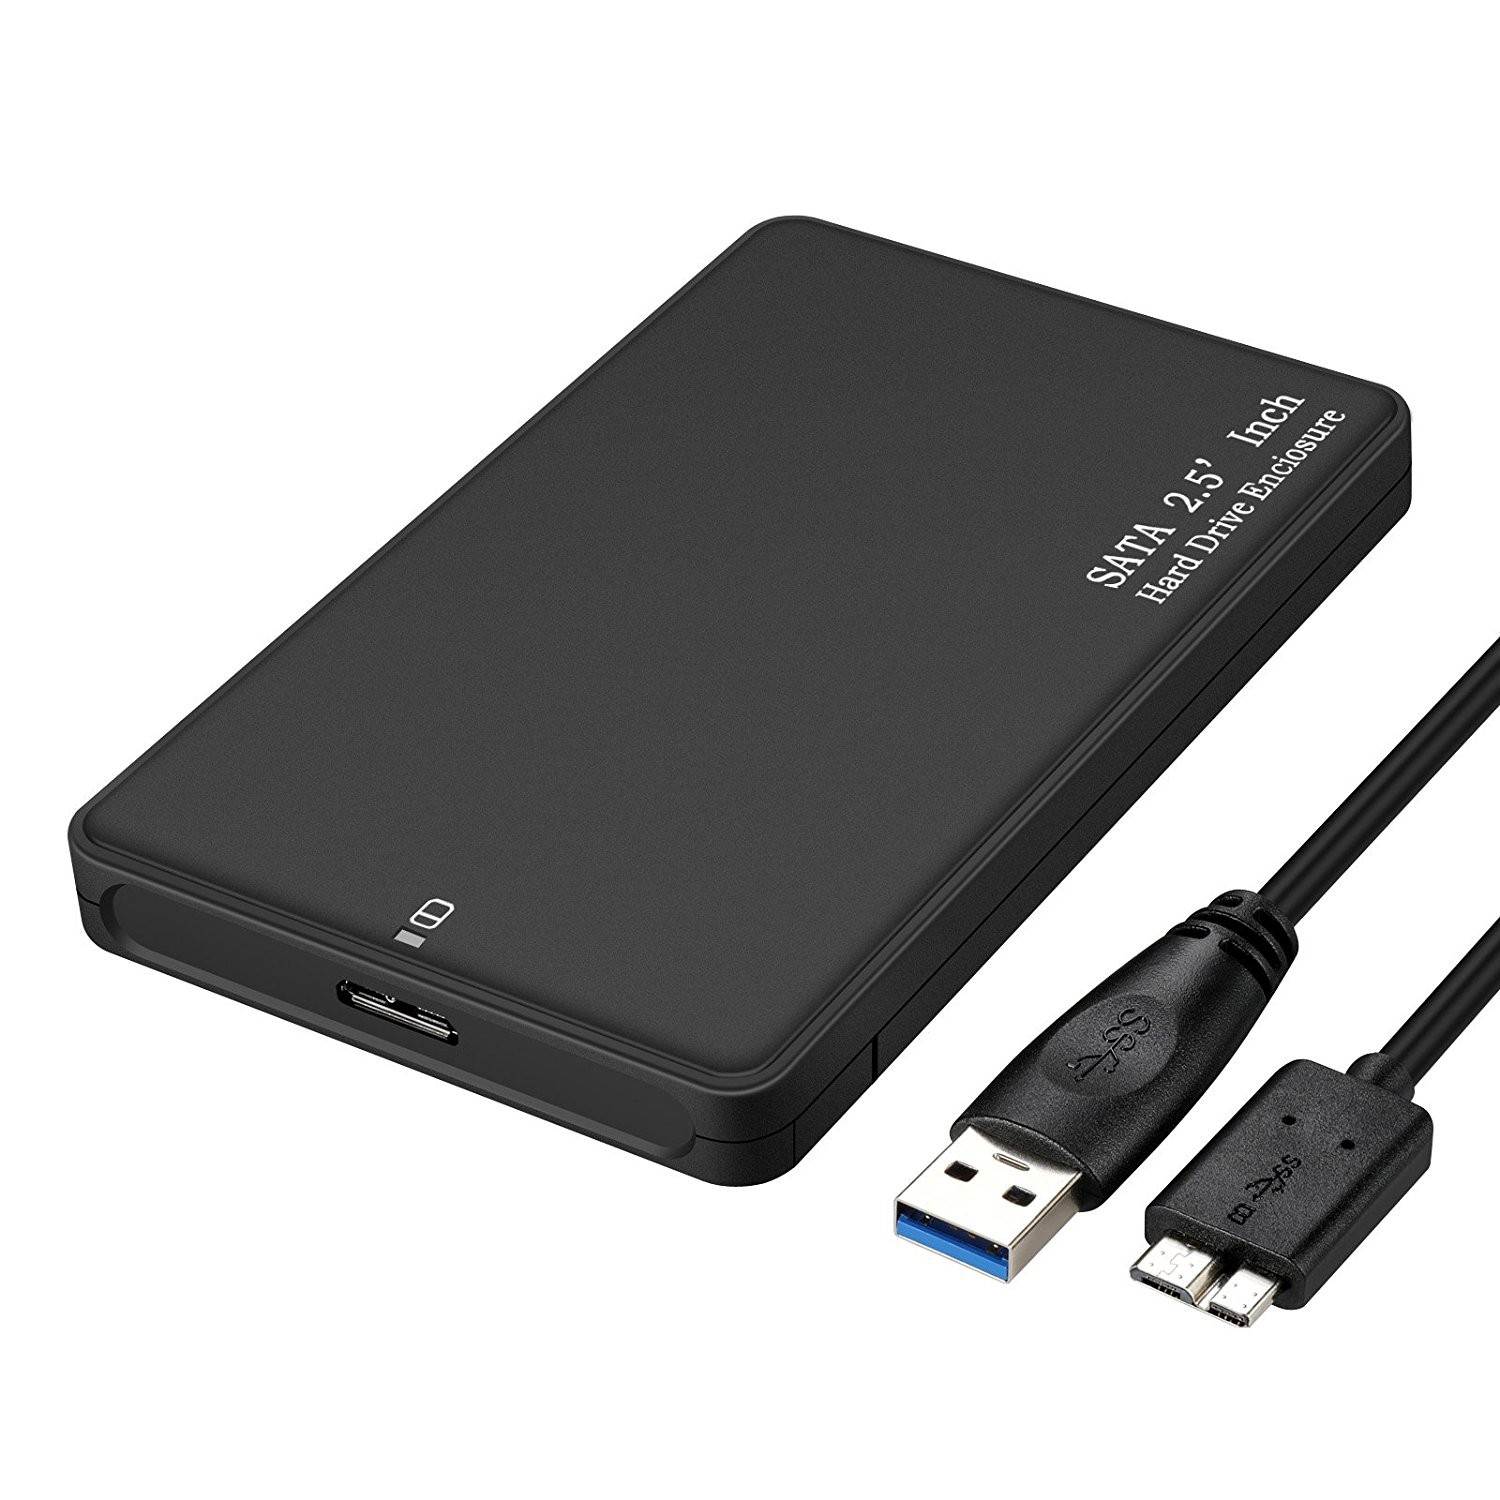 Unilink 2.5” SATA to USB 3.0 Hard Drive Enclosure - Black (Tool